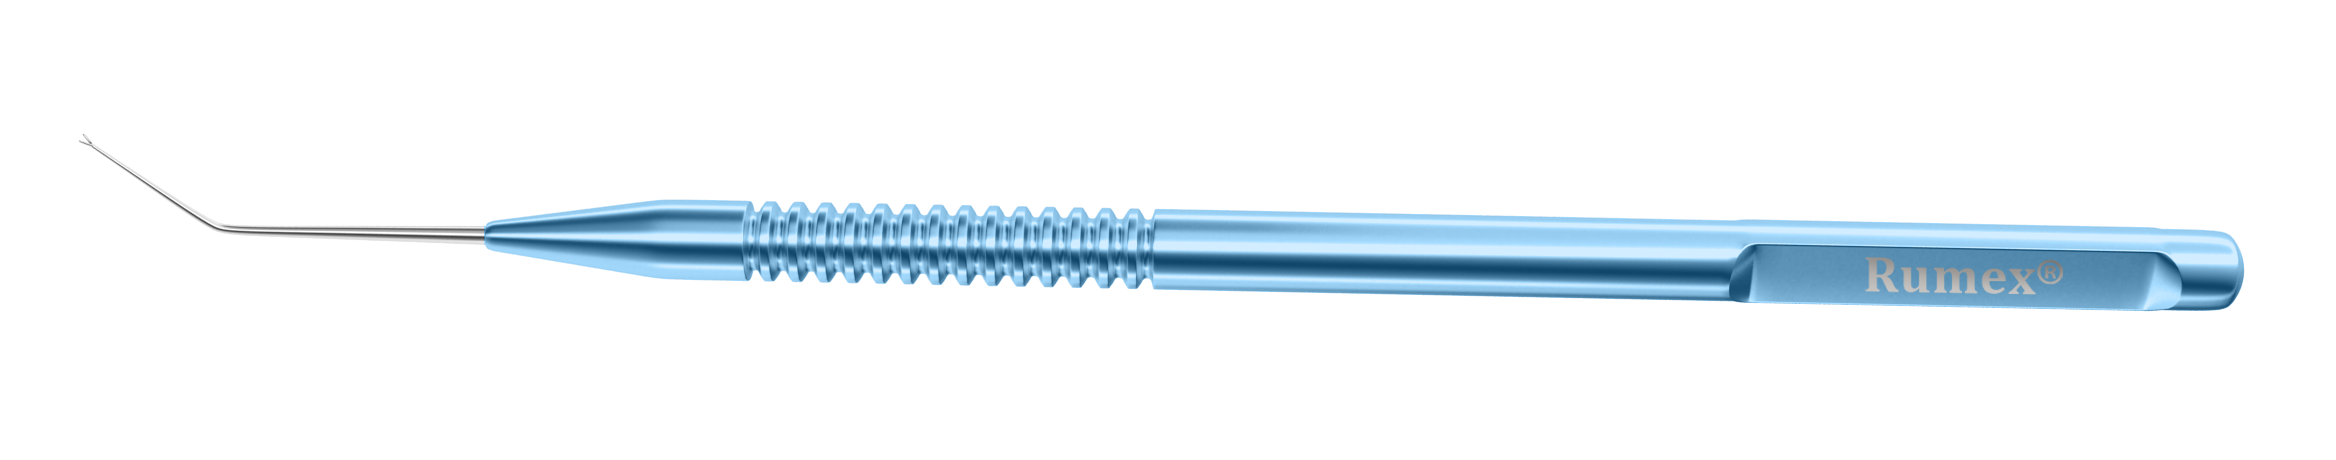 150R 5-034 Bechert Nucleus Rotator, Angled, Y-Shaped Tip, Length 121 mm, Round Titanium Handle